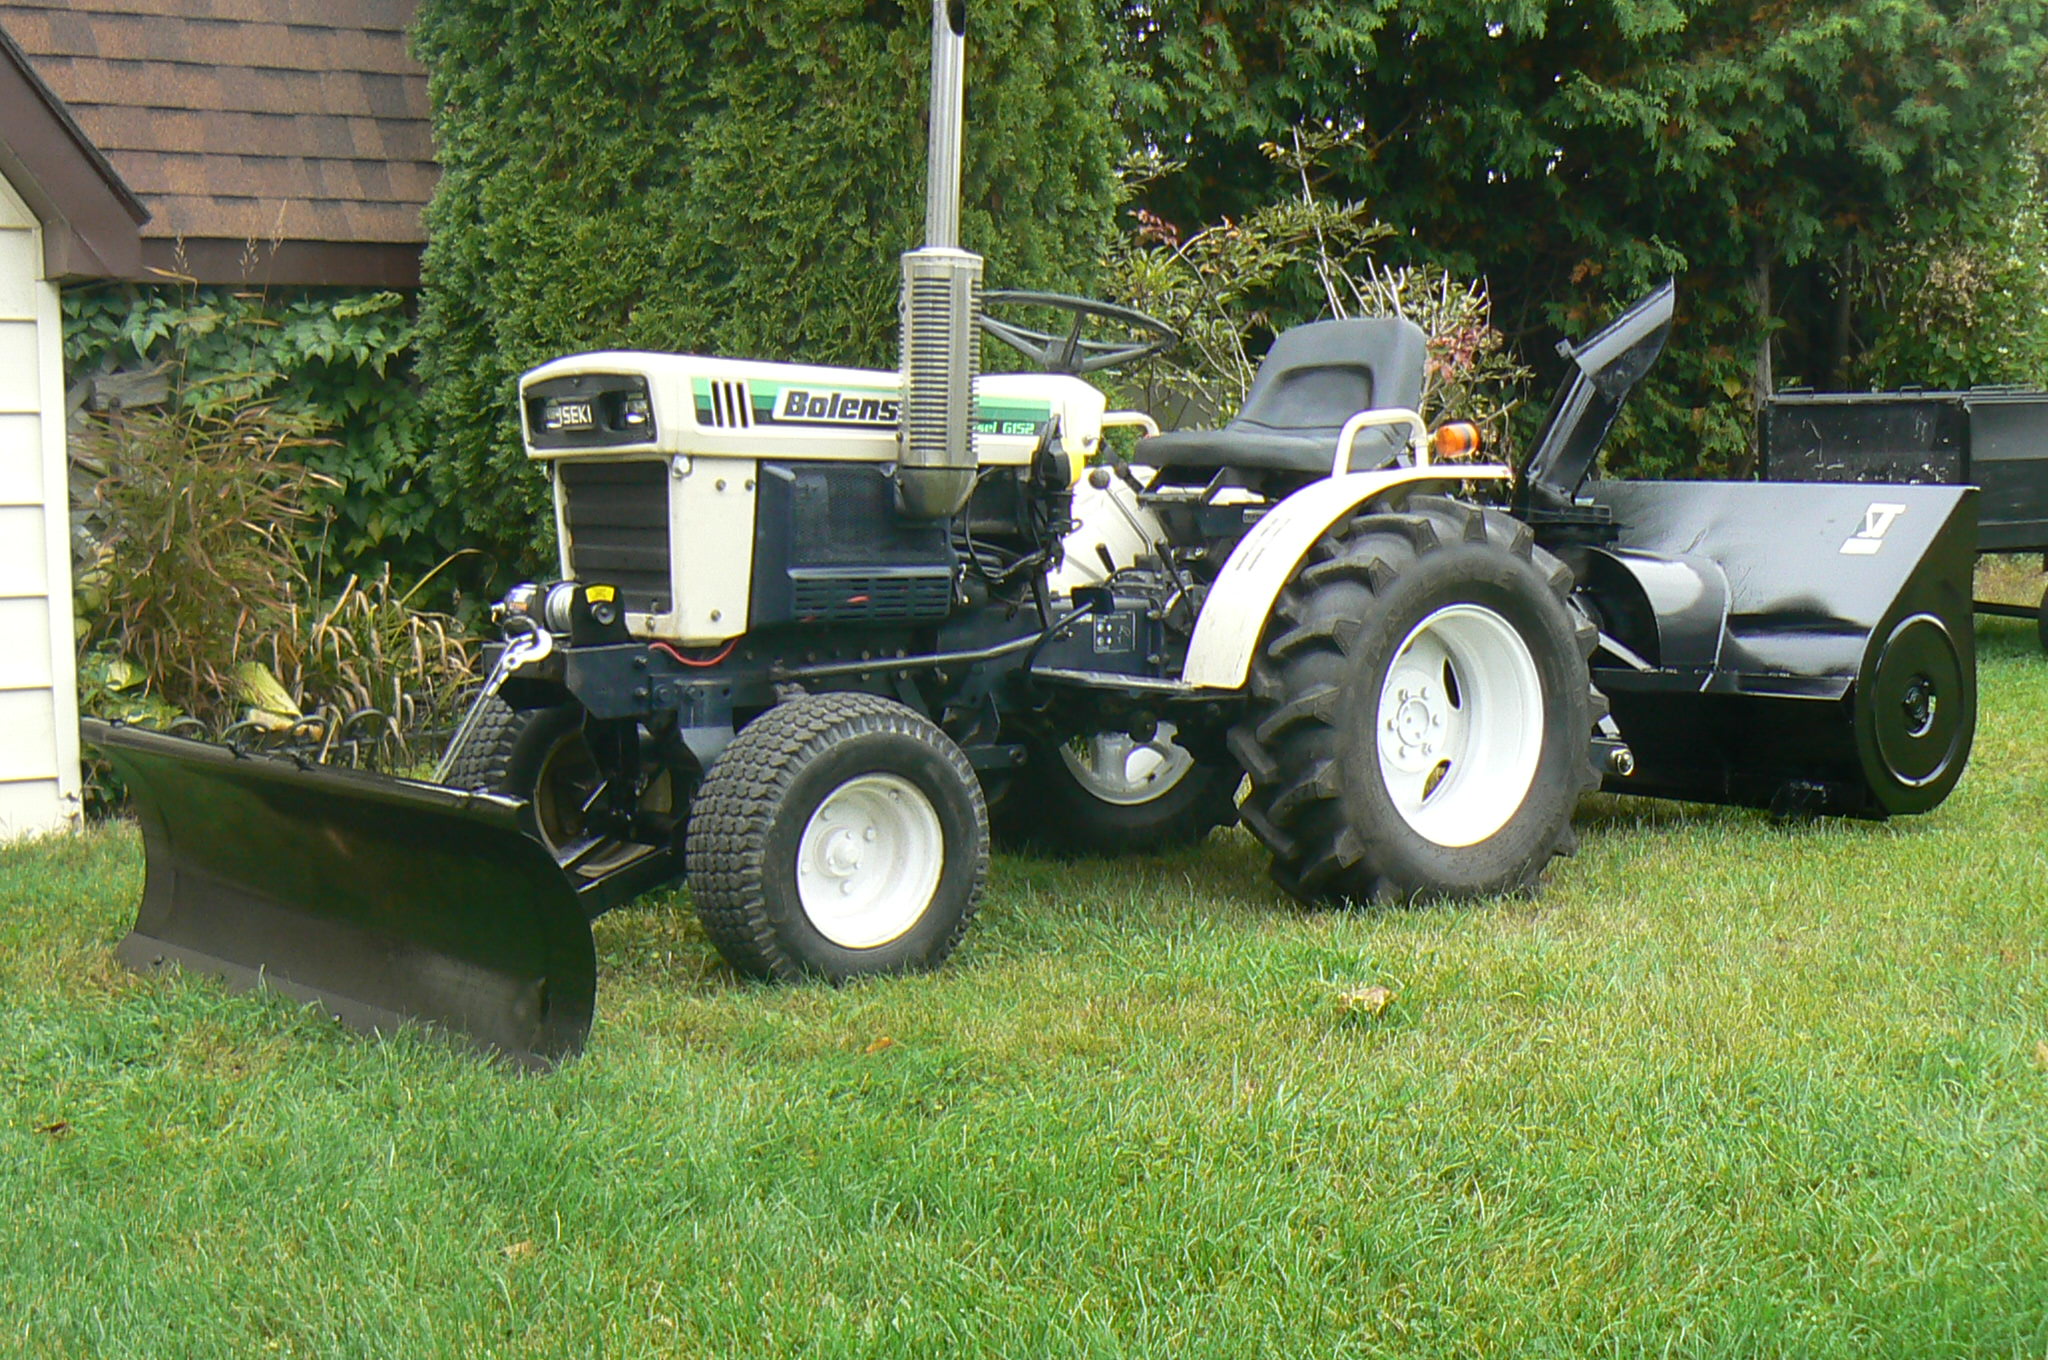 Bolens+Tractors File:Bolens Garden Tractor.JPG - Wikimedia Commons